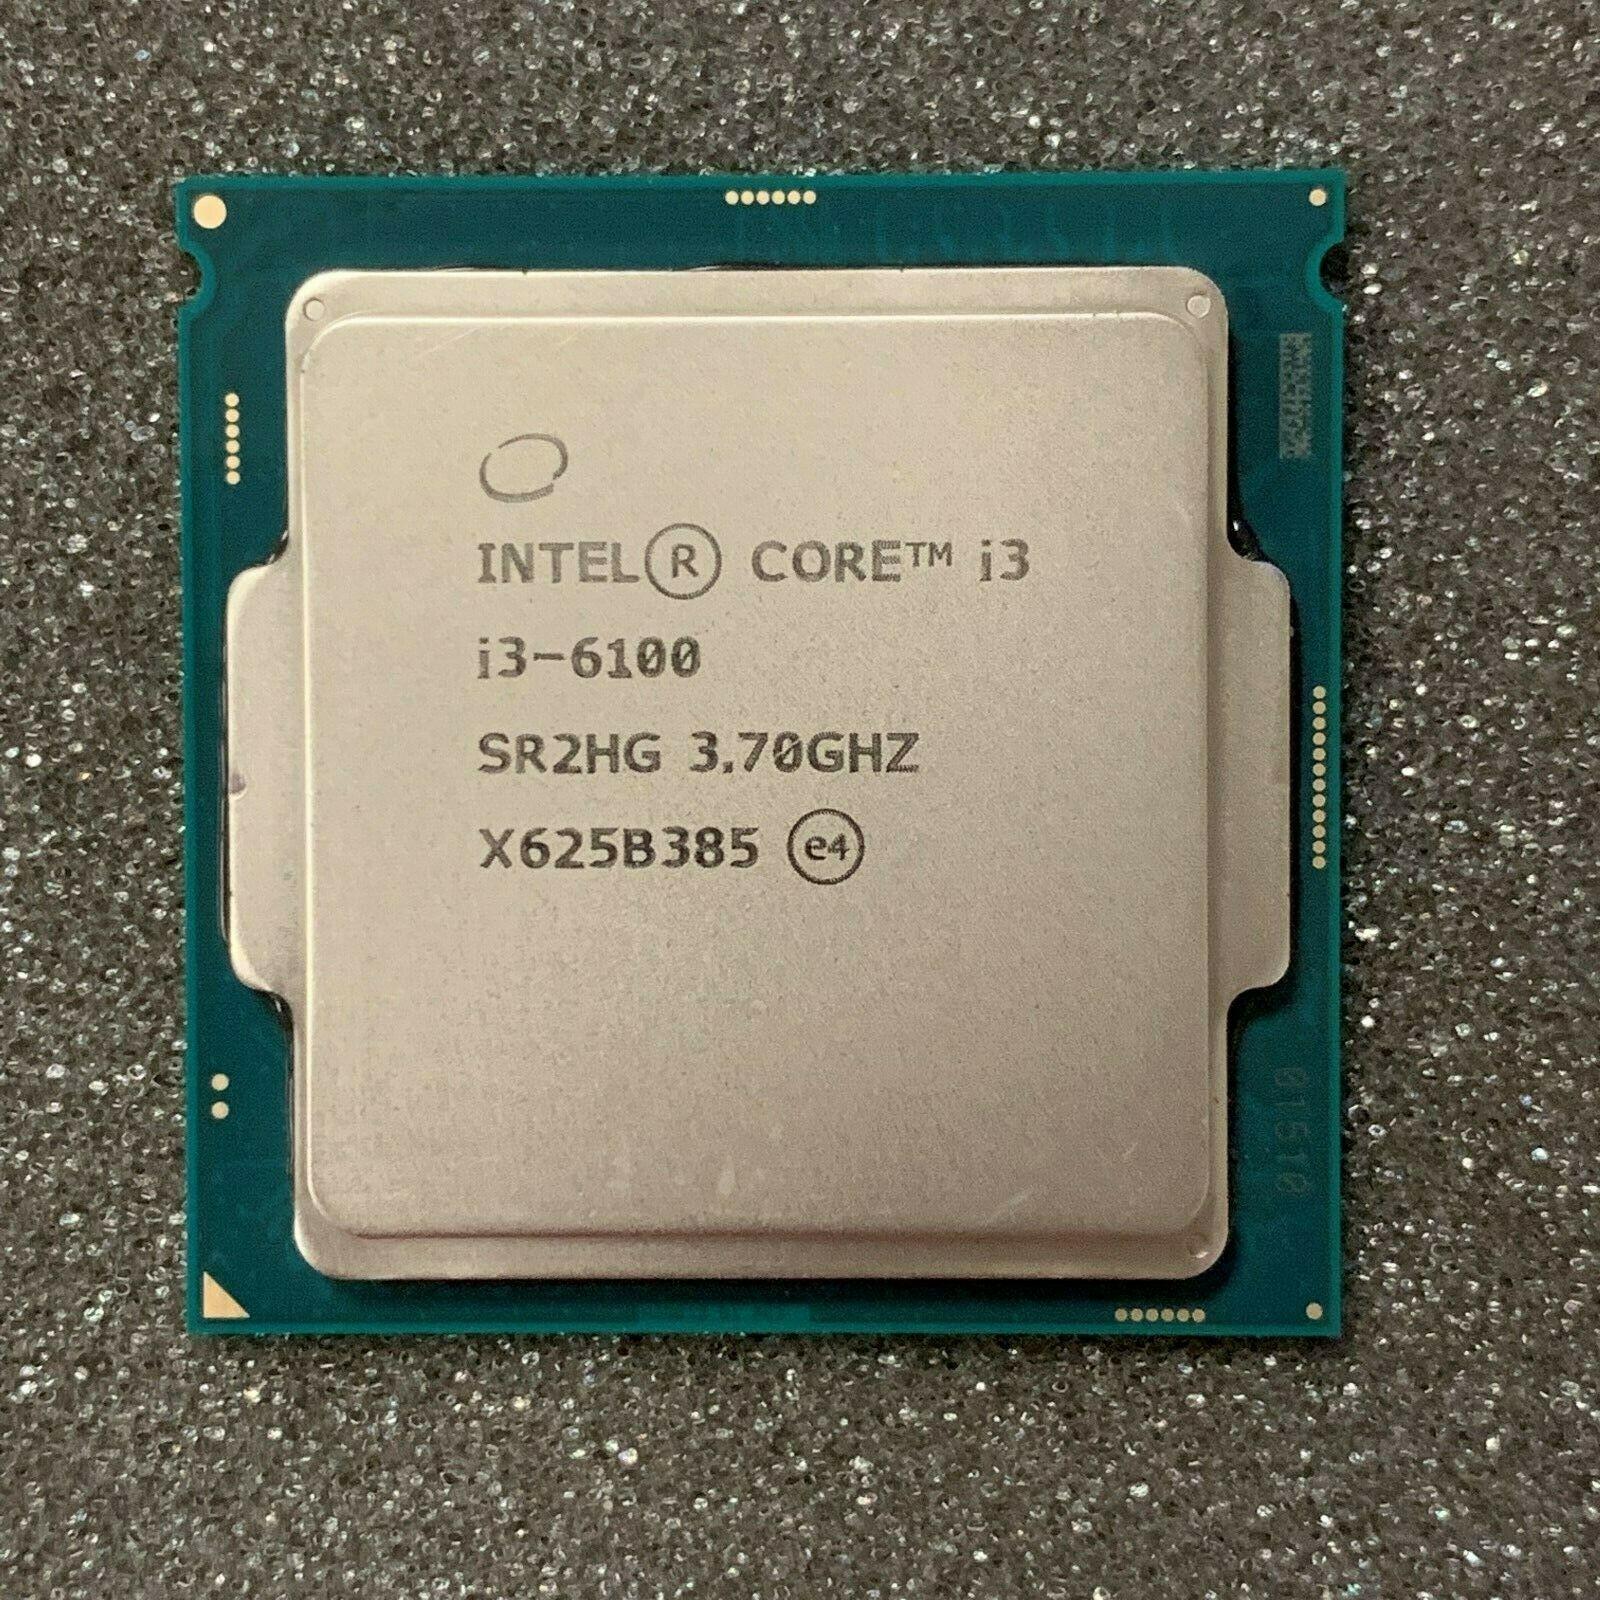 Intel i3-6100 3.7GHz 3M Socket LGA 1151 (SR2HG) Desktop Processor